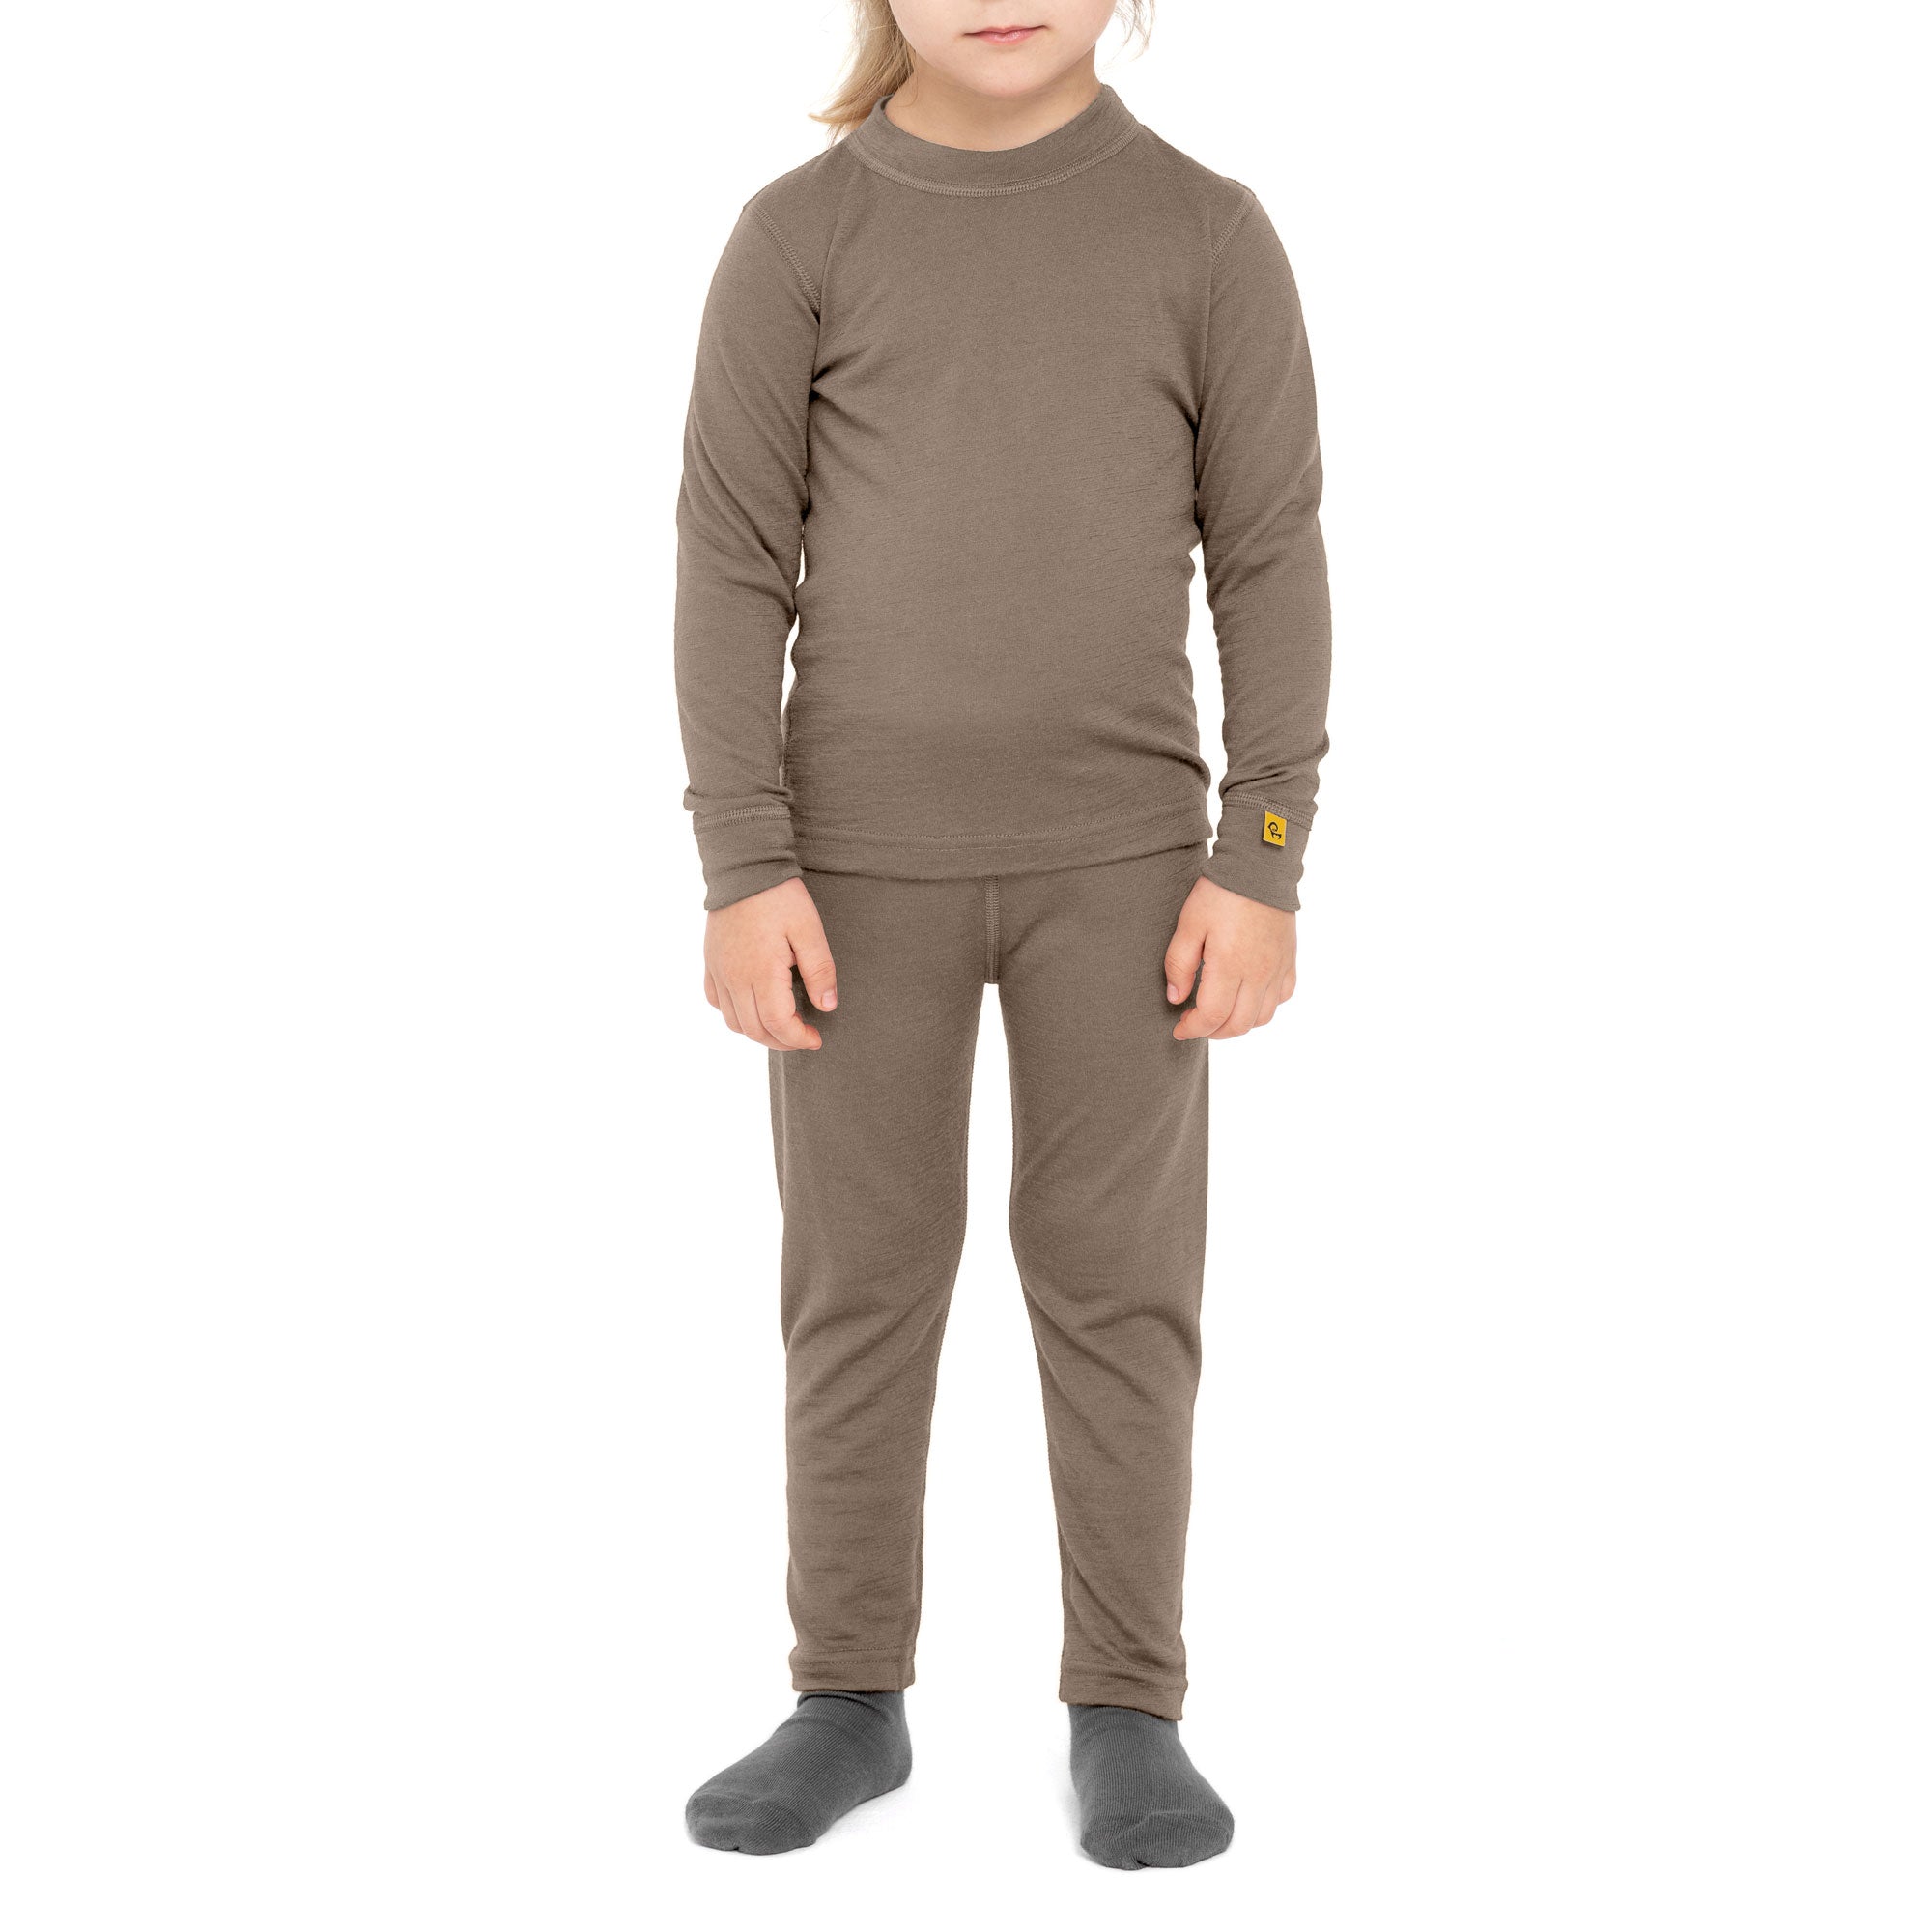 Organic Kids Matching Set * Merino Wool Base Layer Matching Outfit